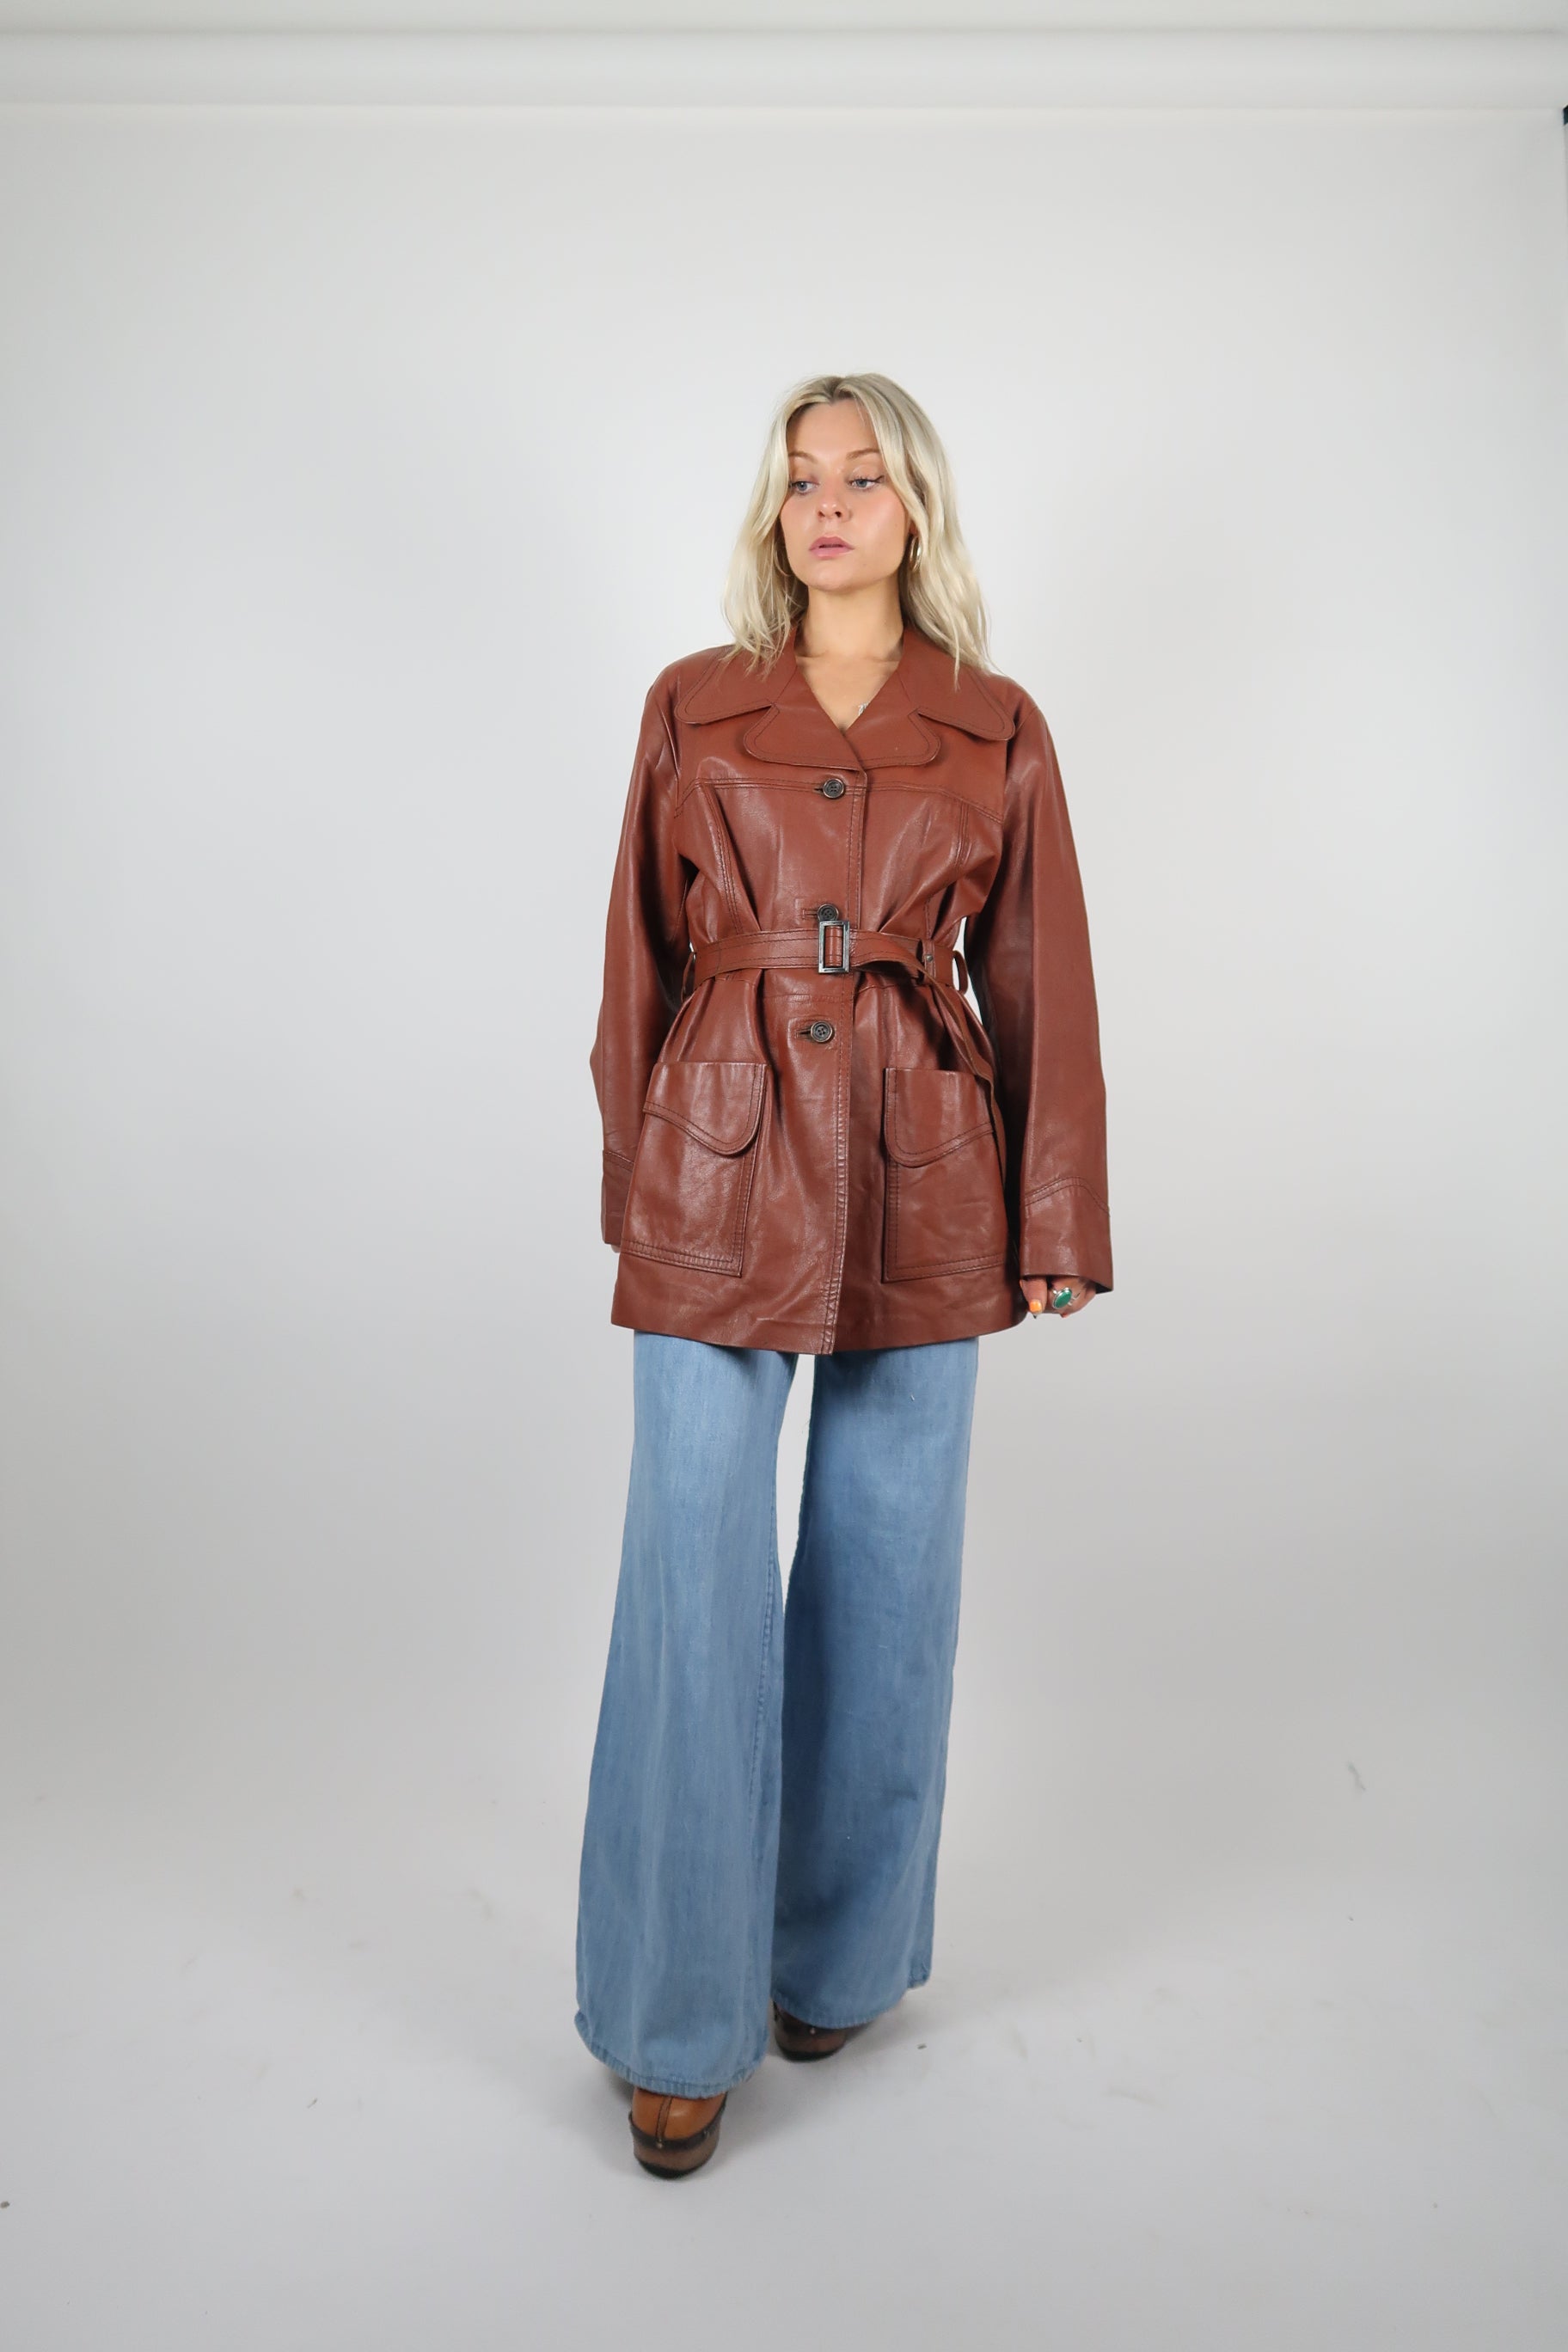 70s Burgundy Leather Jacket - Rock the Jumpsuit